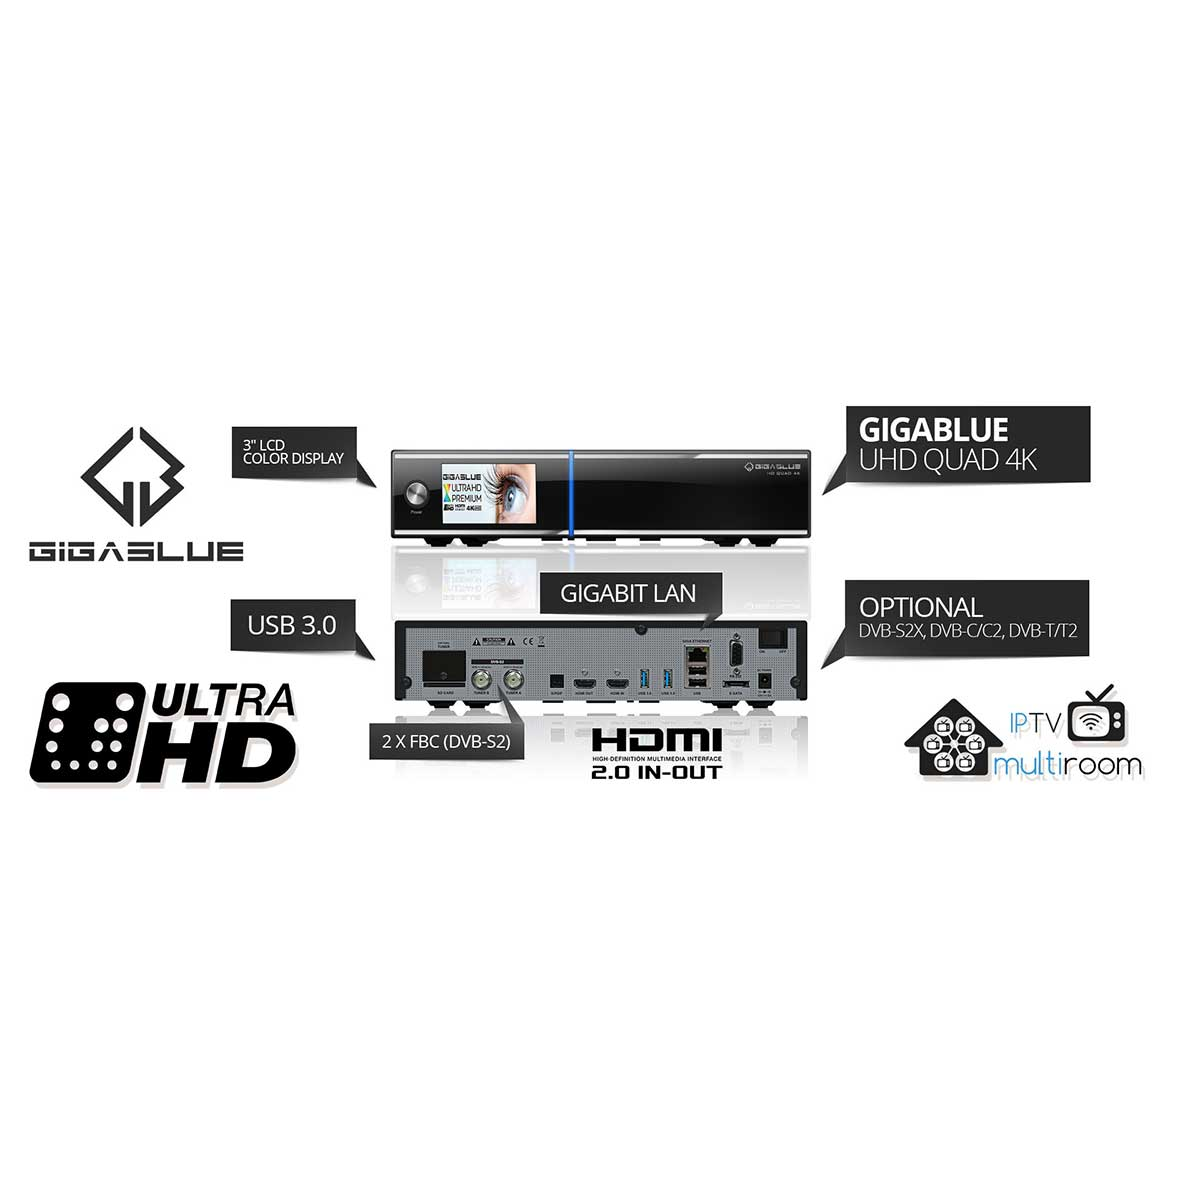 (HDTV, Sat-Receiver schwarz) DVB-S2, Tuner, PVR-Funktion=optional, 4K Twin QUAD UHD DVB-S, GIGABLUE